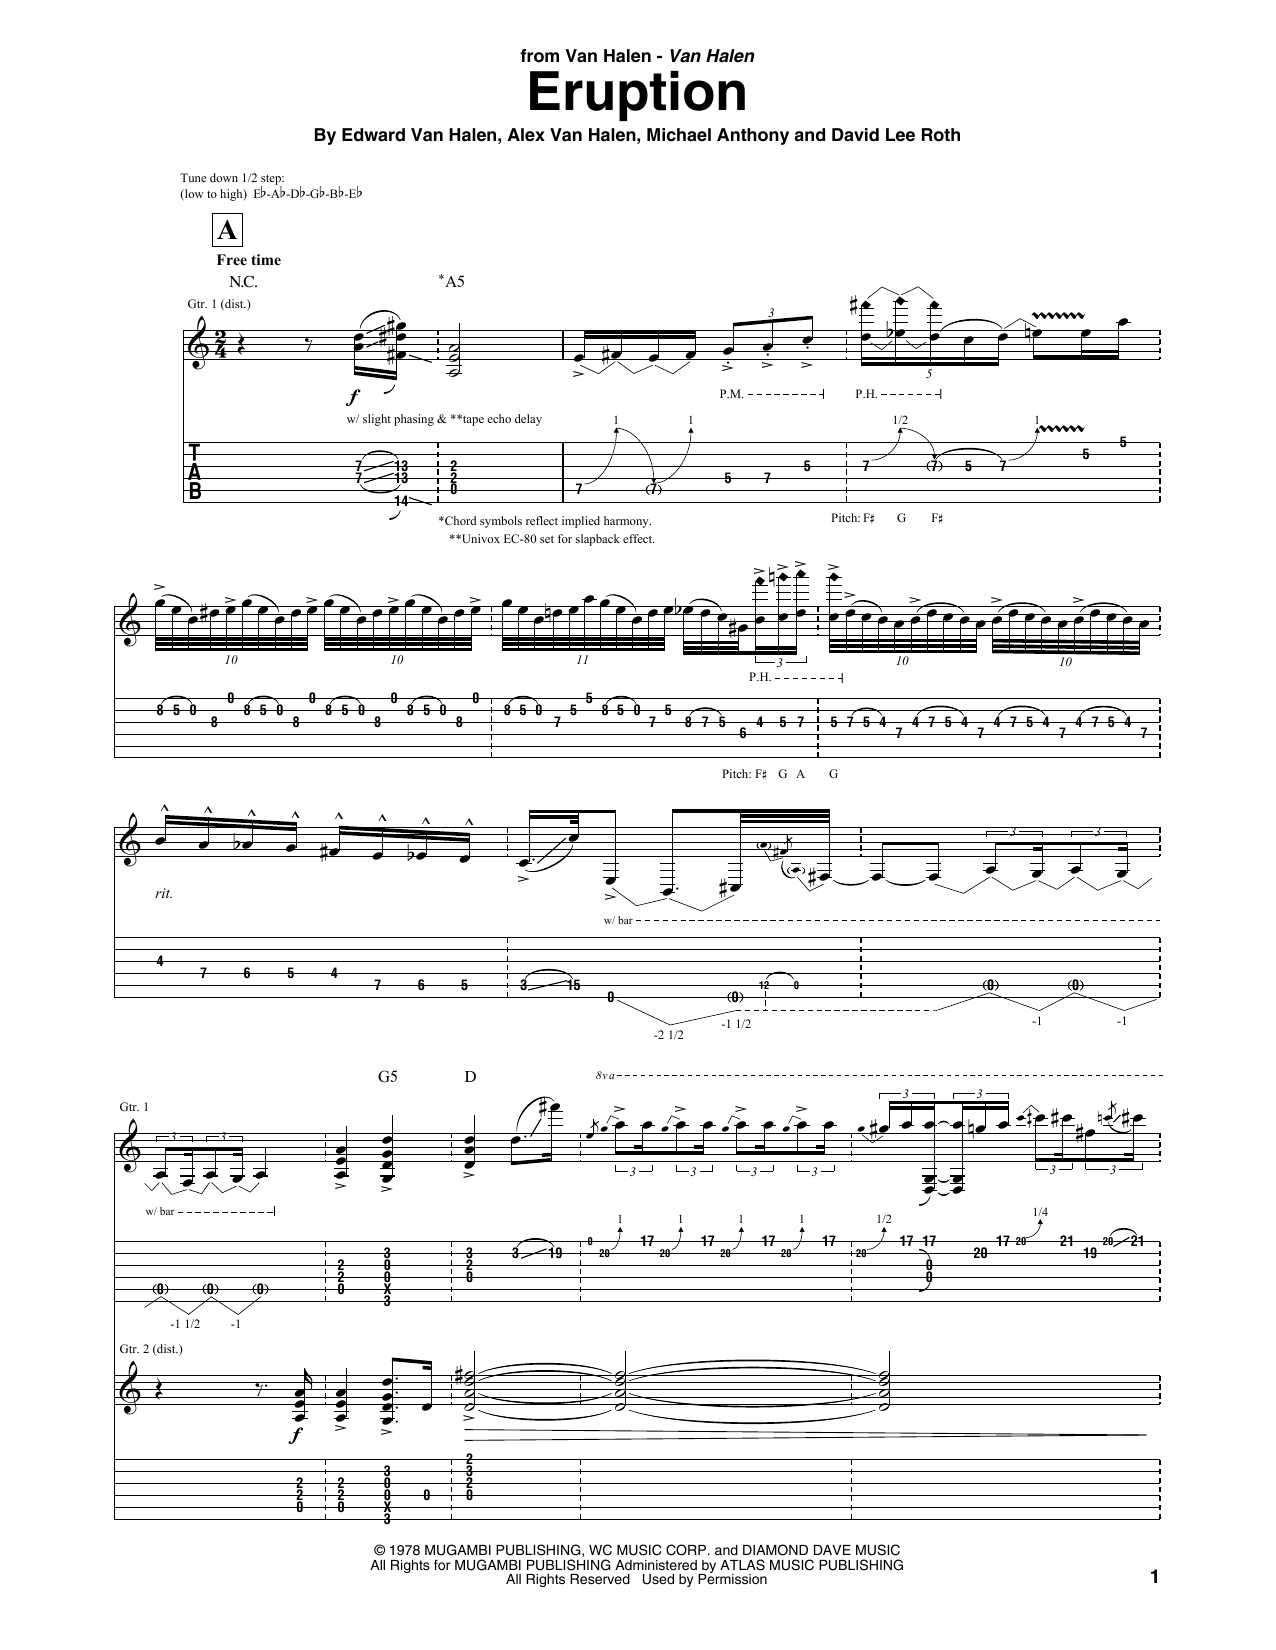 Van Halen Eruption Sheet Music Notes & Chords for Guitar Tab Play-Along - Download or Print PDF